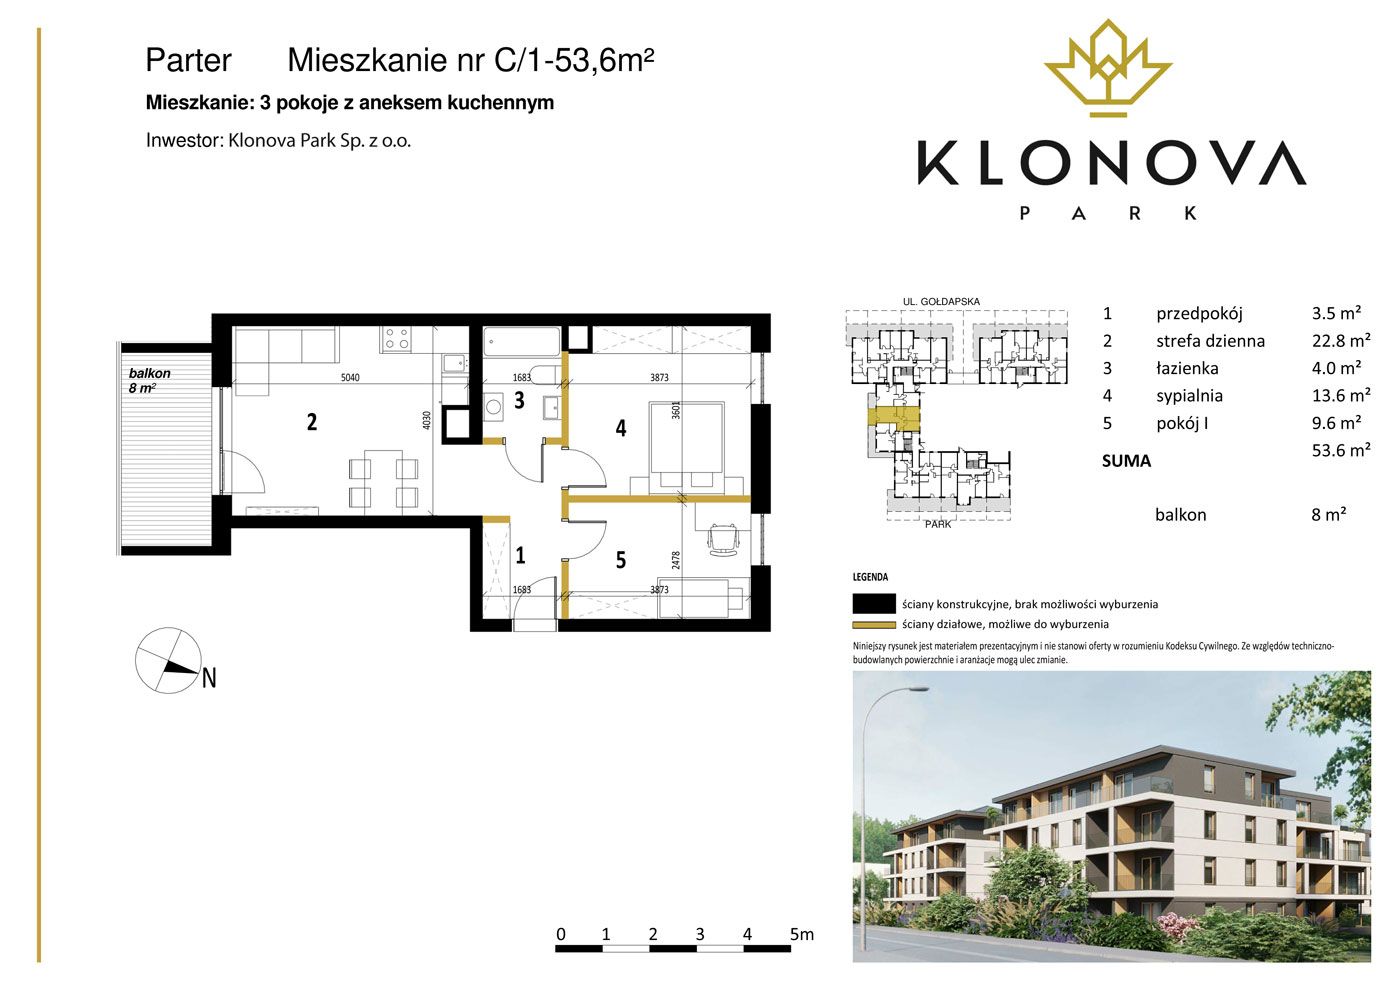 Apartamenty Klonova Park - Plan mieszkania C/1